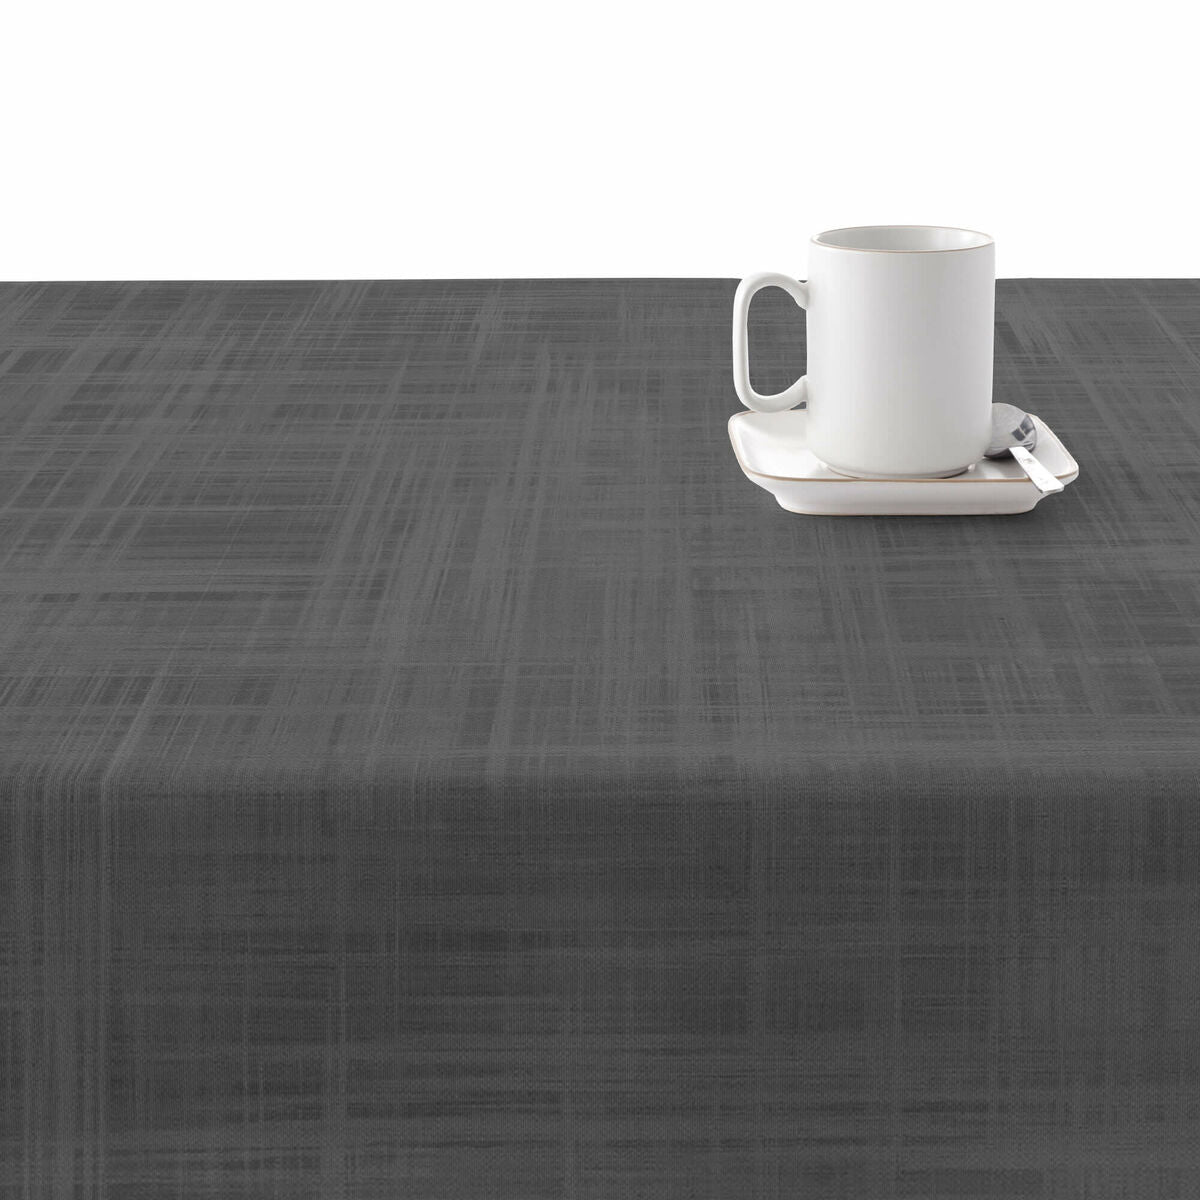 Stain-proof tablecloth Belum Dark grey 100 x 300 cm